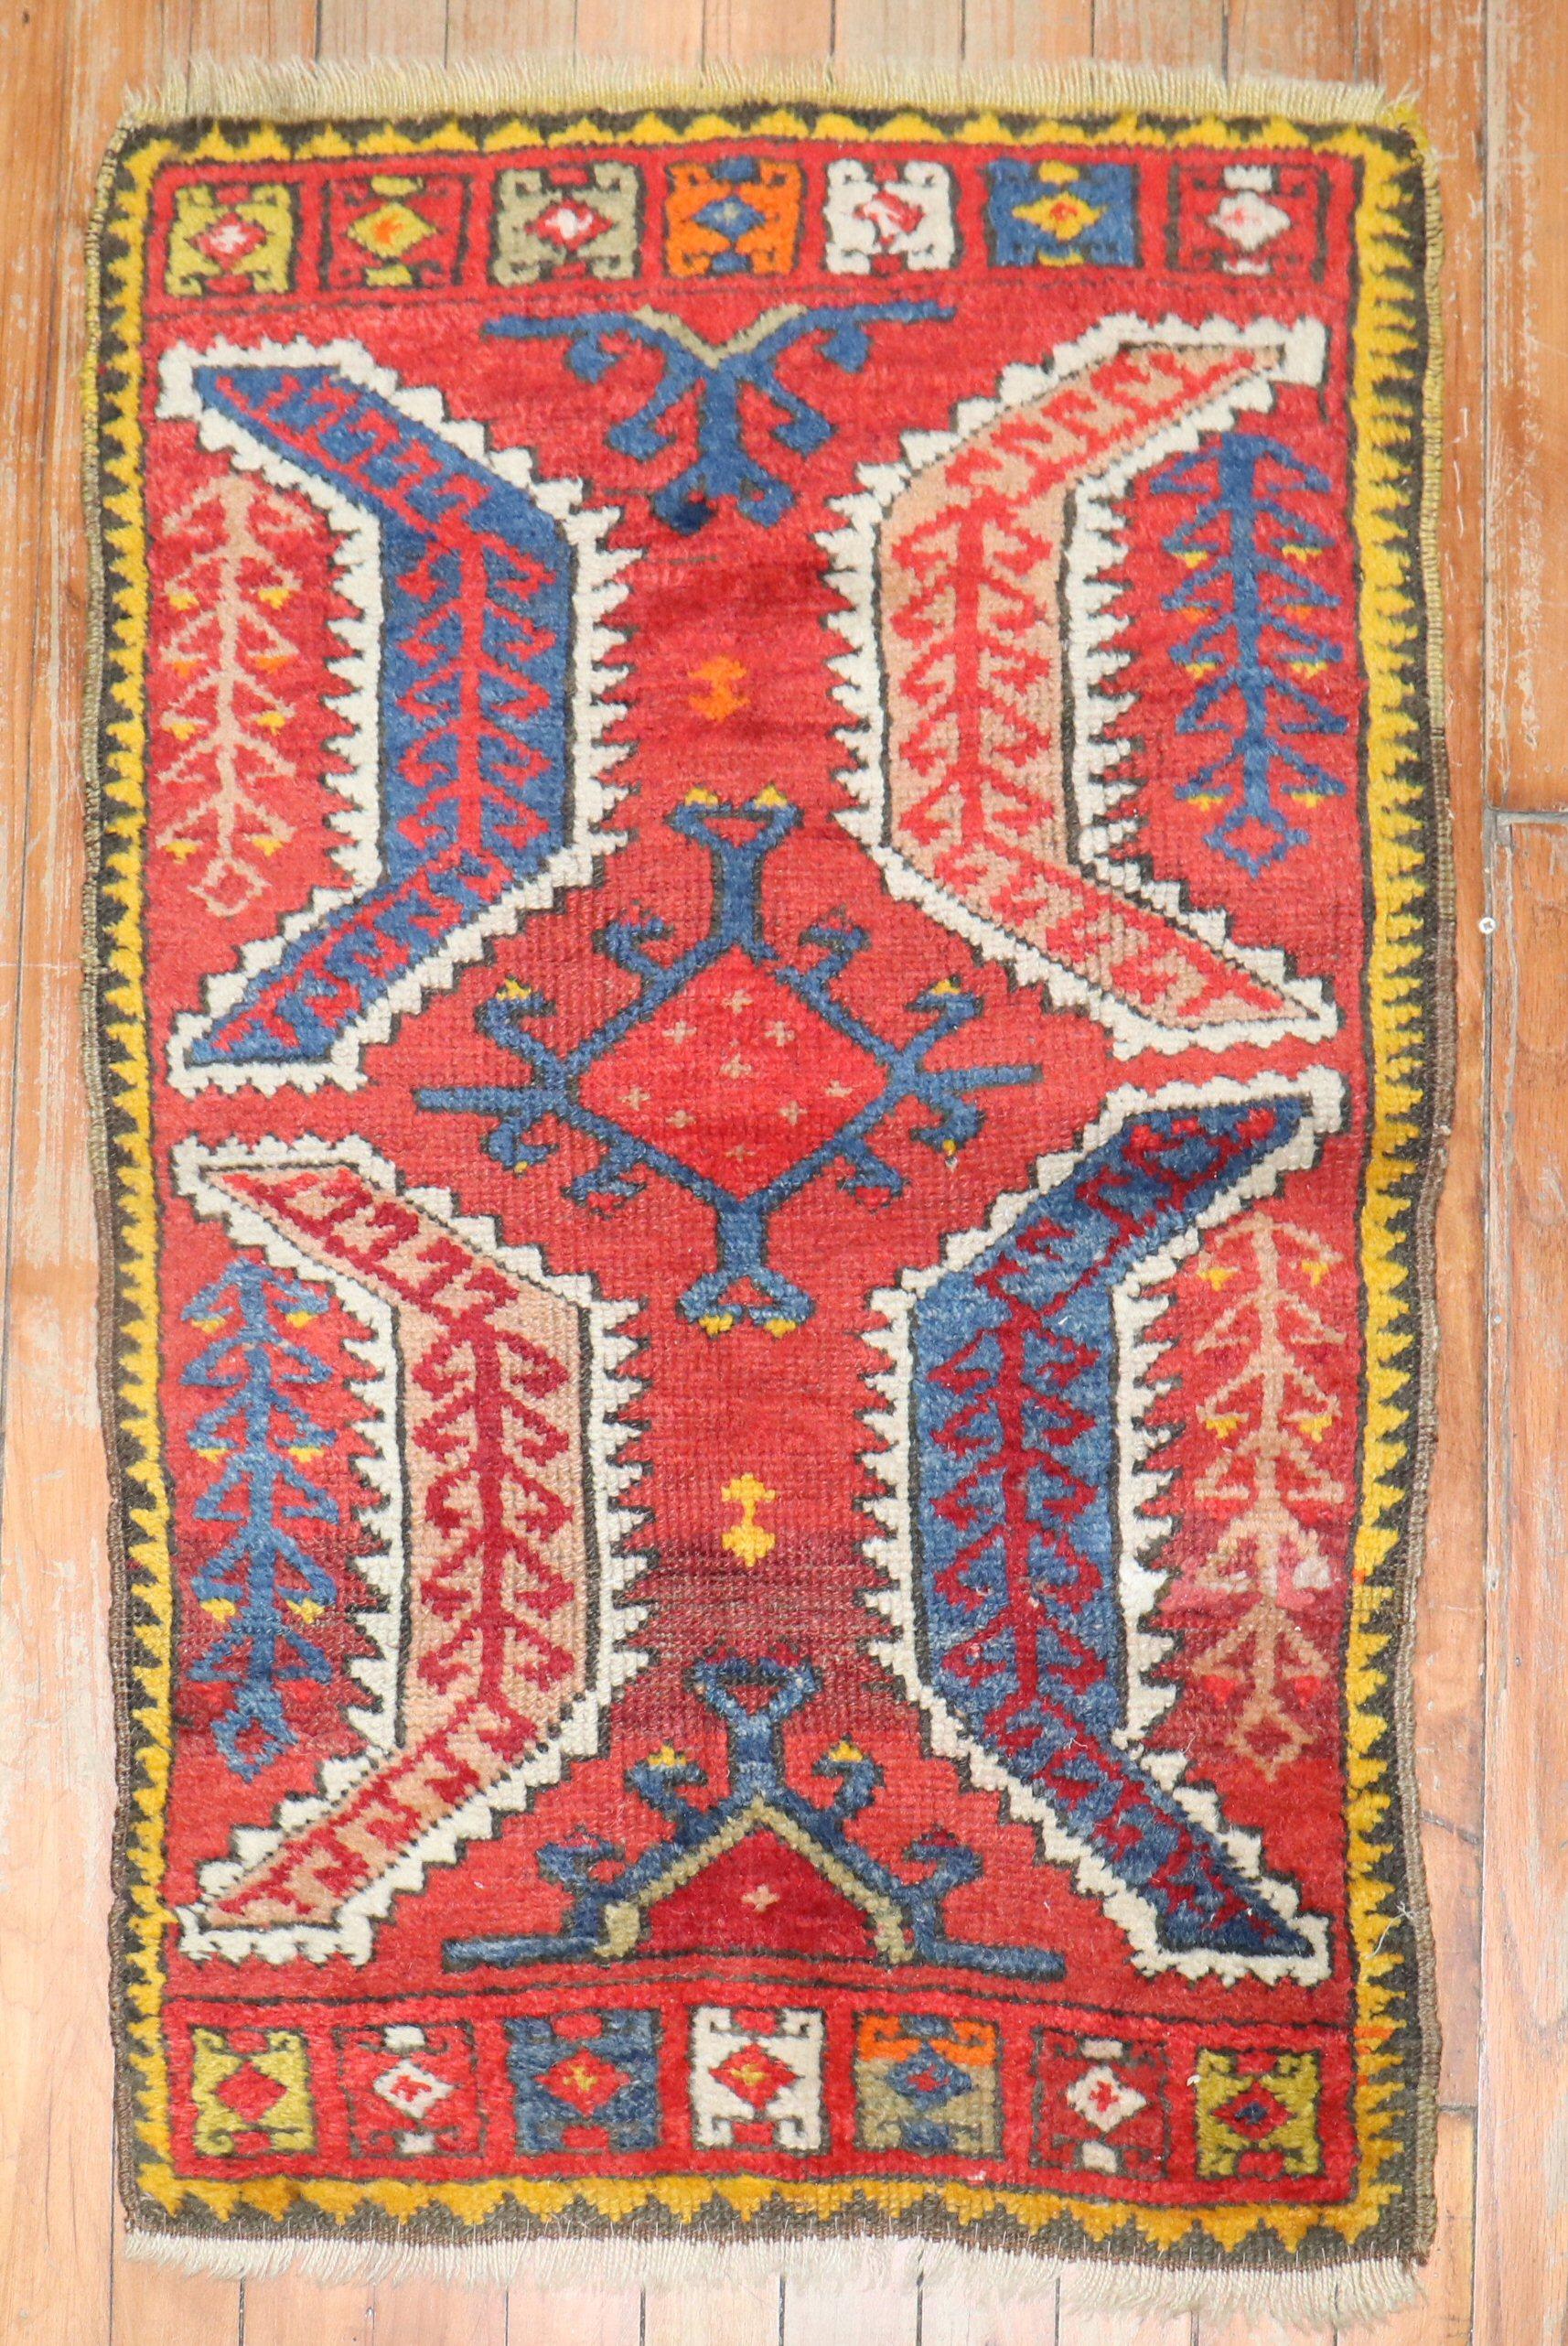 Colorful Late 19th century Turkish Yastik rug

Measures: 1'11'' x 3'6''.